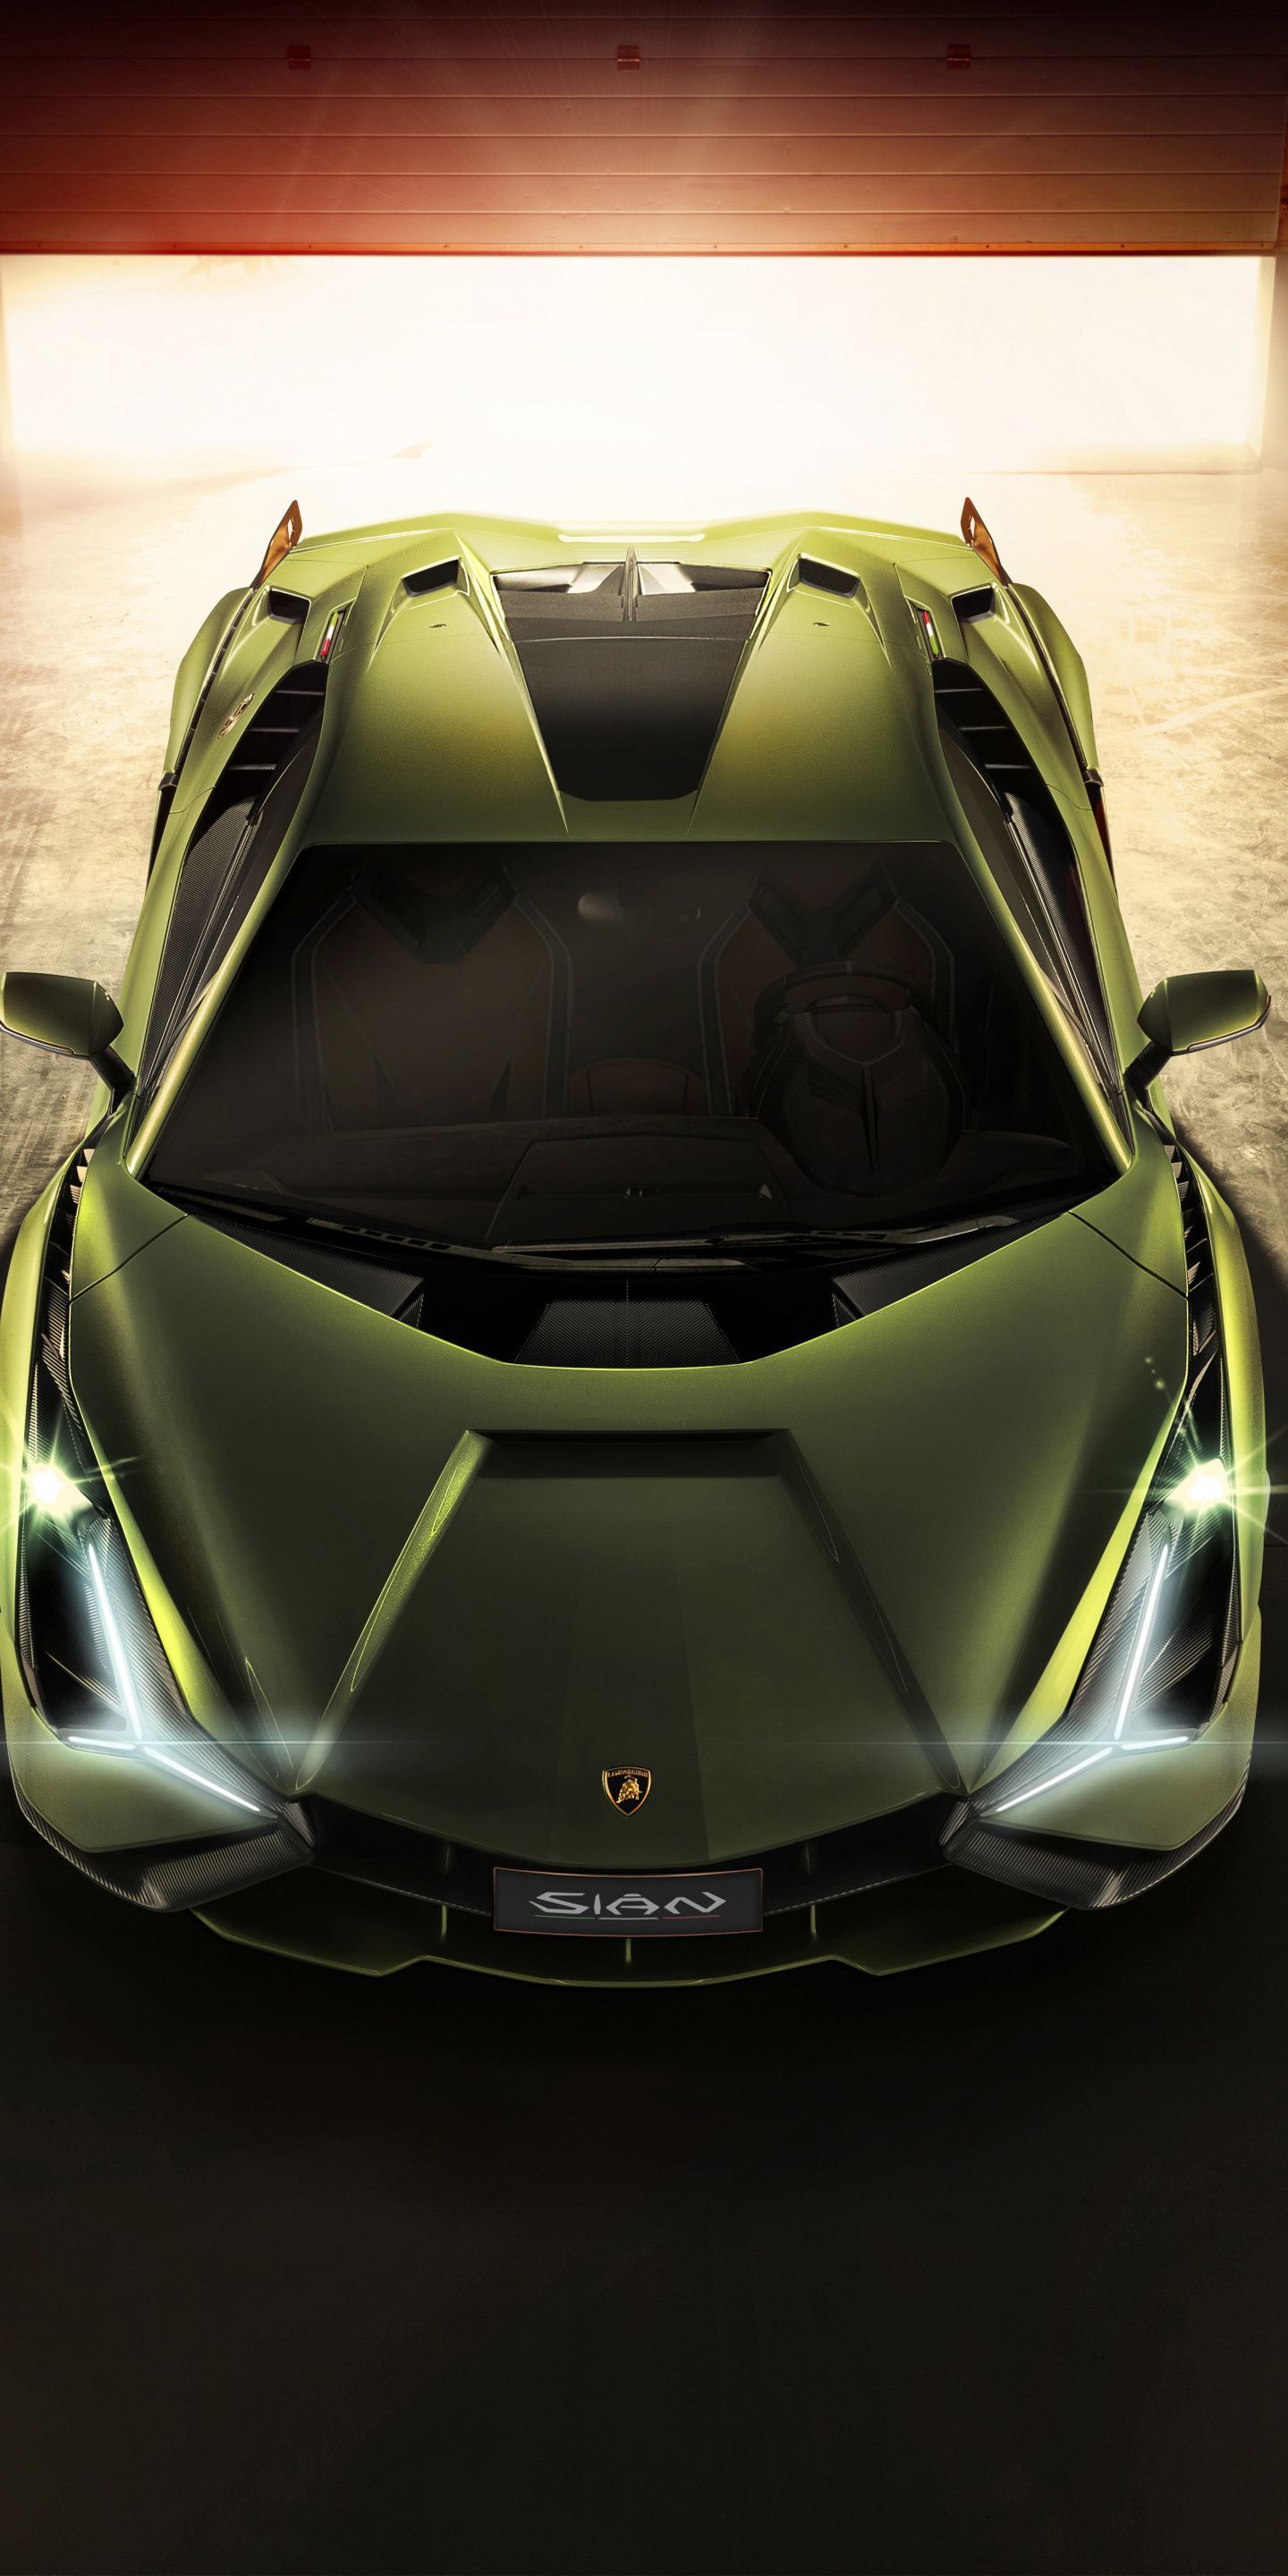 Lamborghini Sian, Top Front View, 2019 Car Wallpaper. Sports Cars Luxury, Car Wallpaper, Super Cars